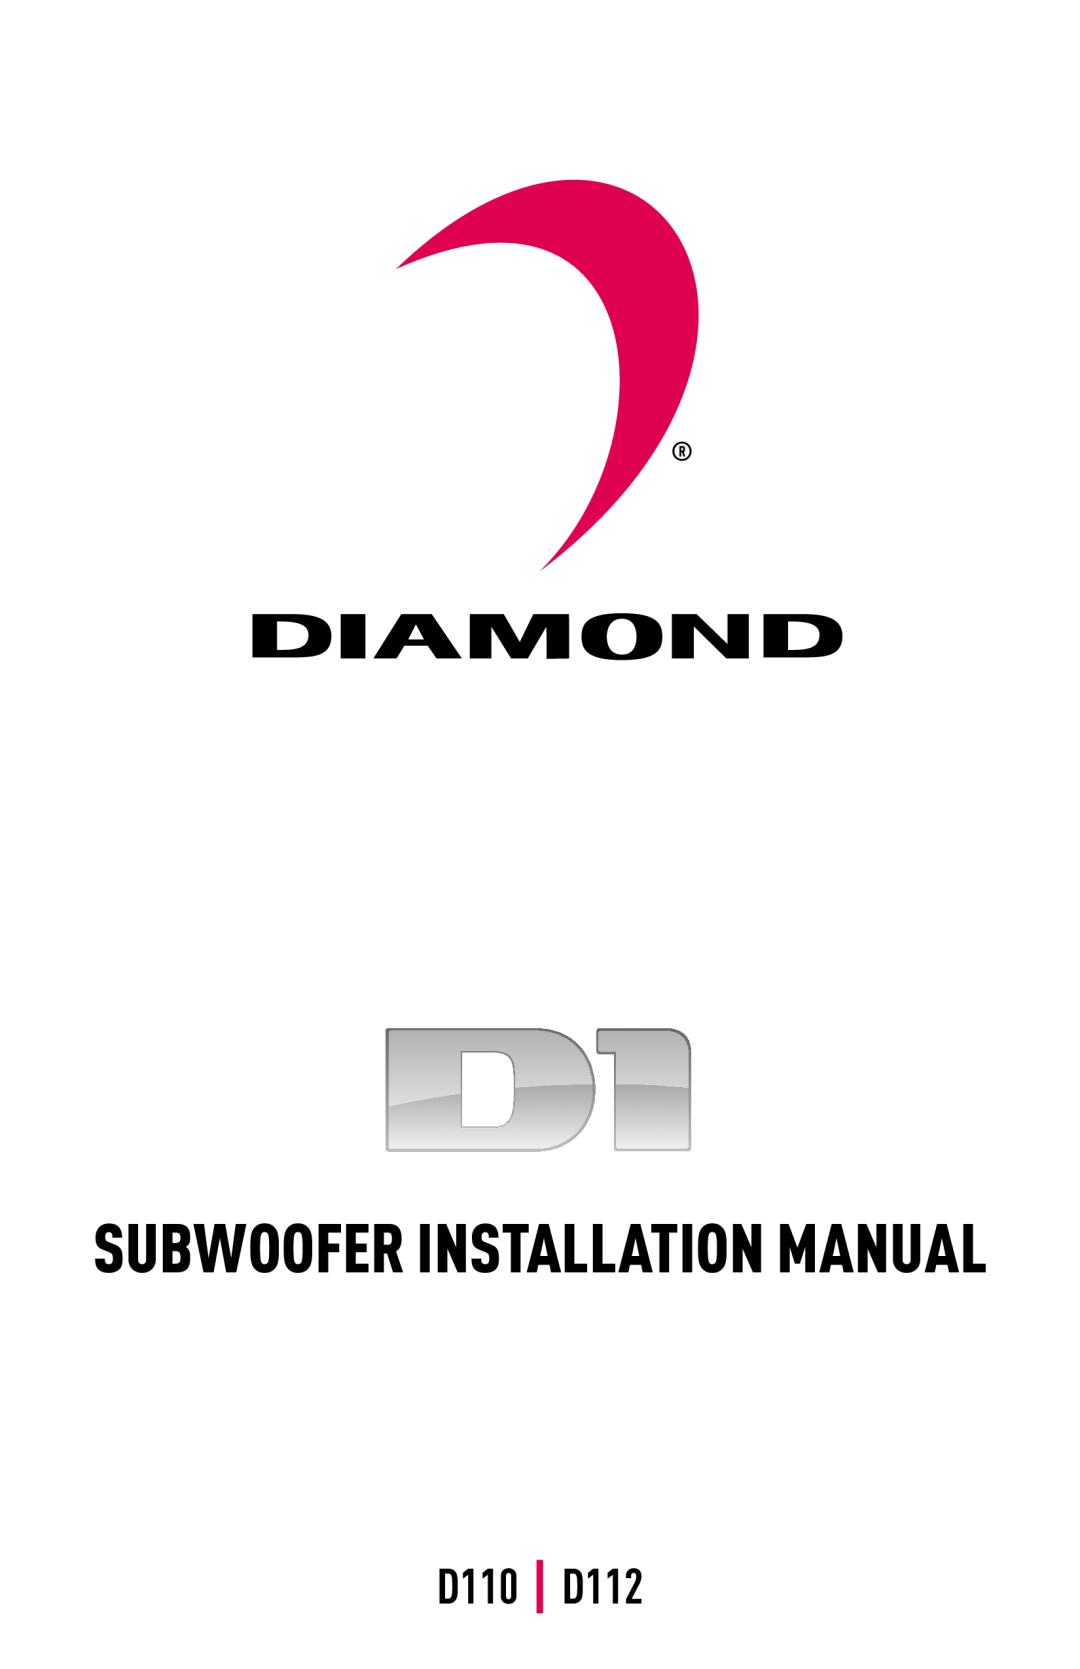 Diamond installation manual Subwoofer Installation Manual, D110 D112 